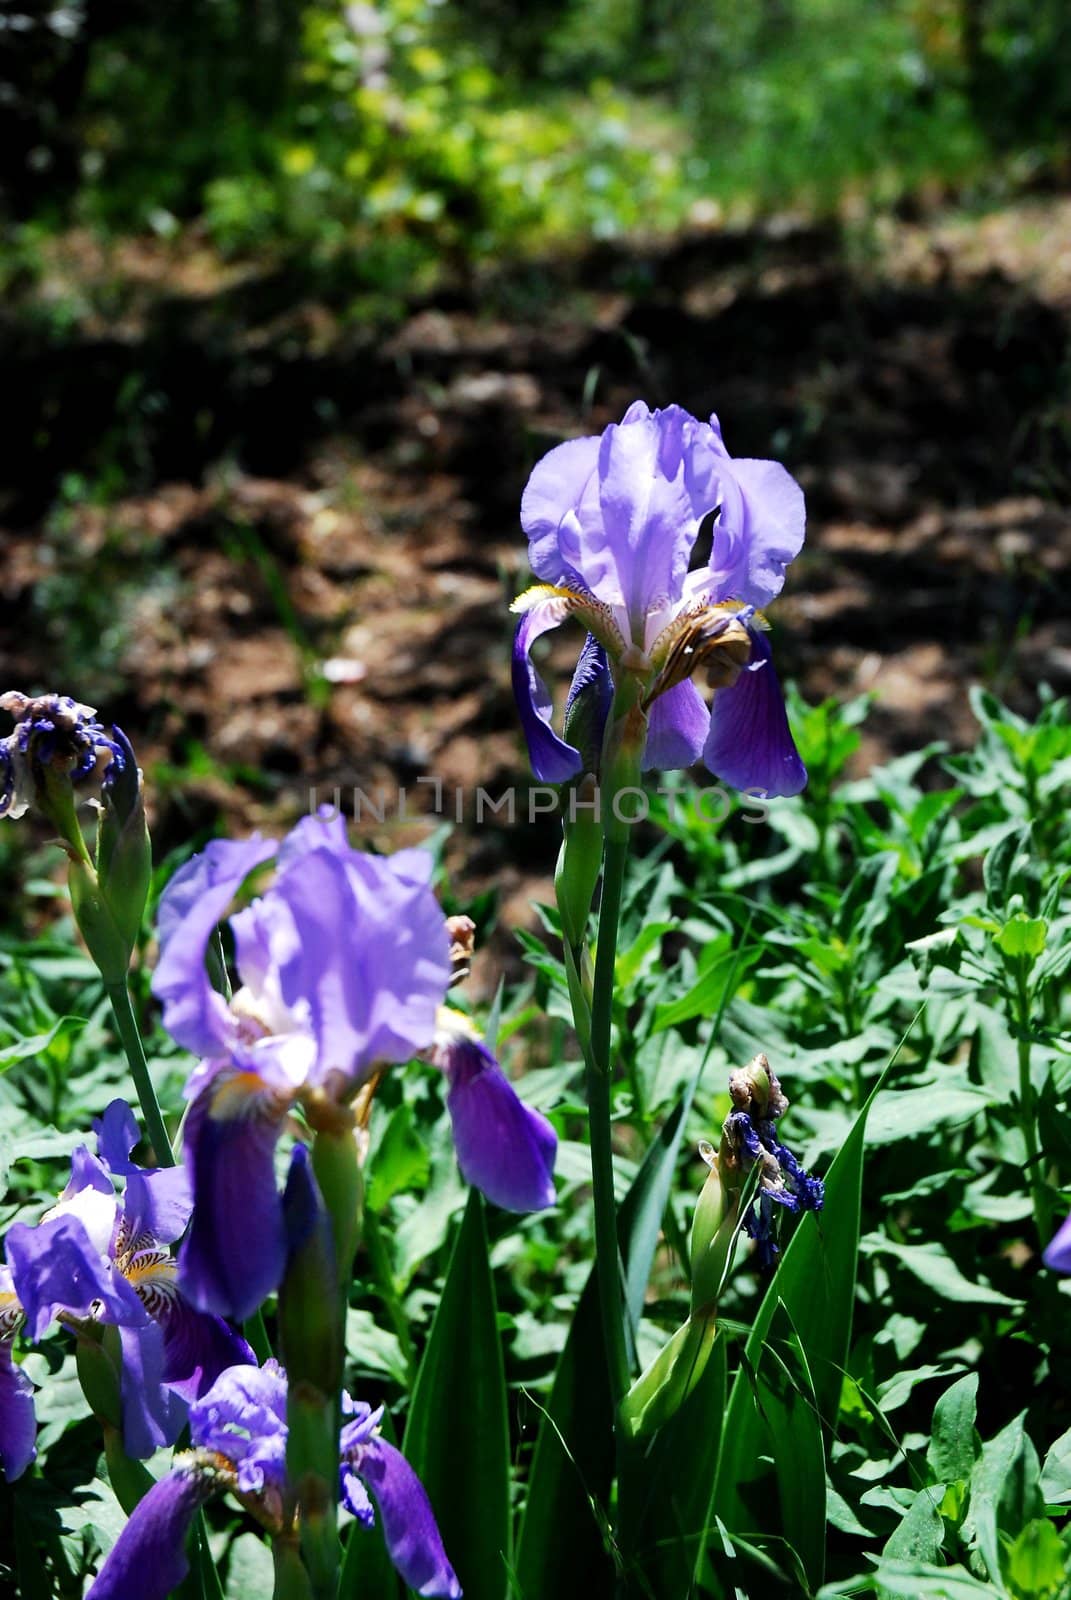 Violet flower - iris. by candan